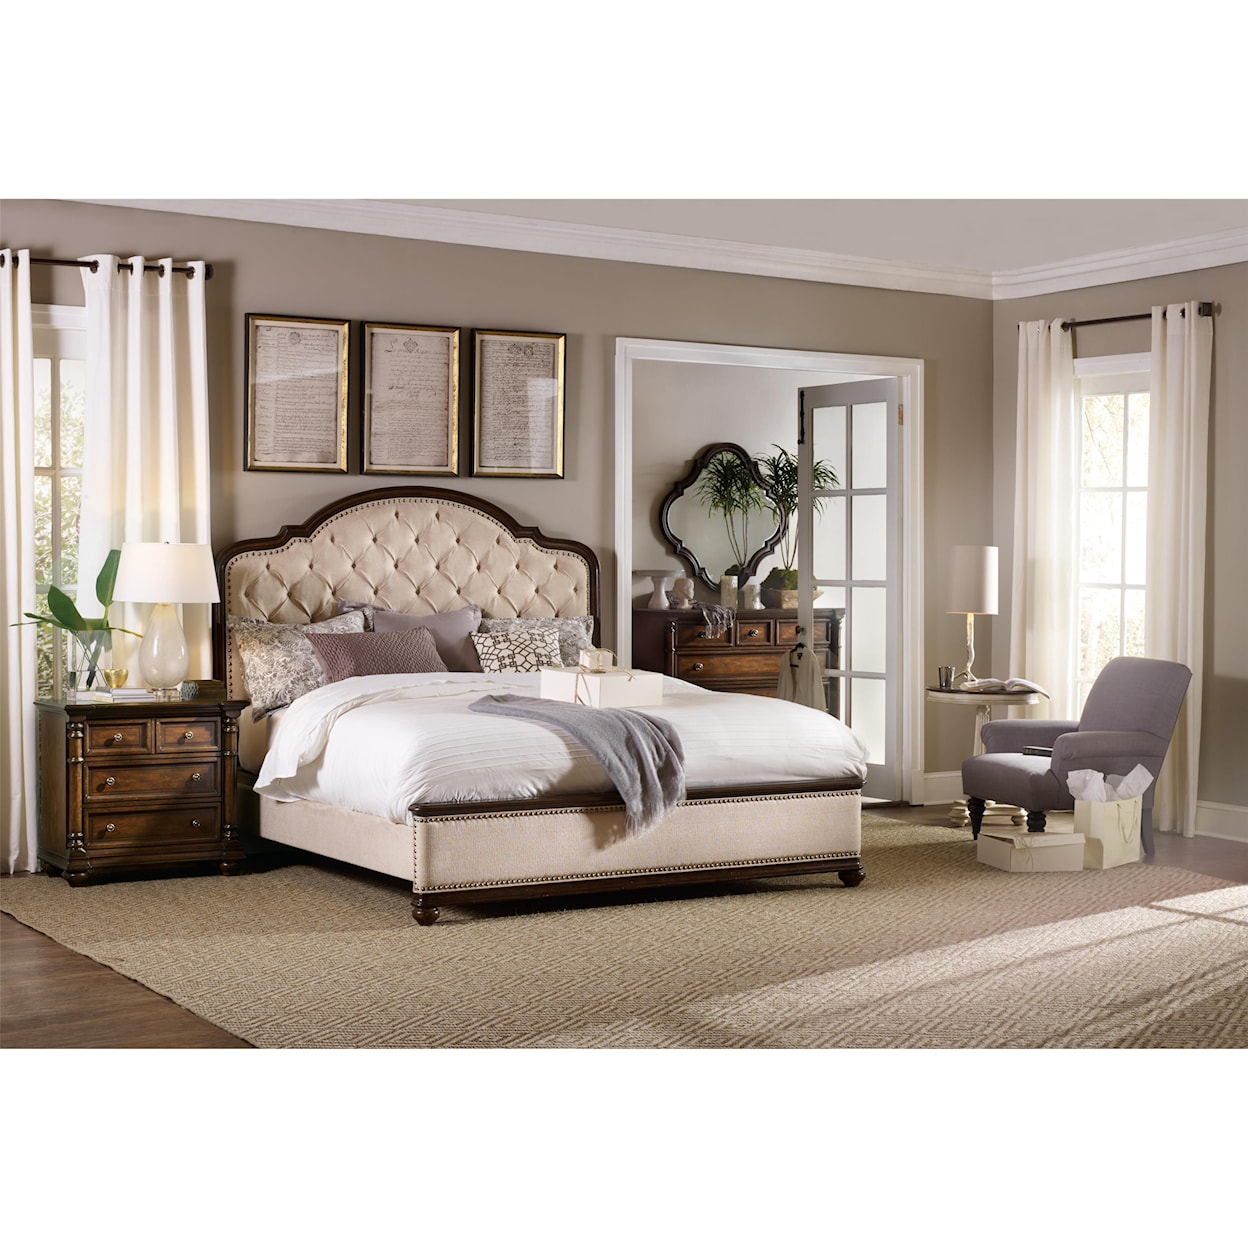 Hooker Furniture Leesburg Queen Size Upholstered Bed